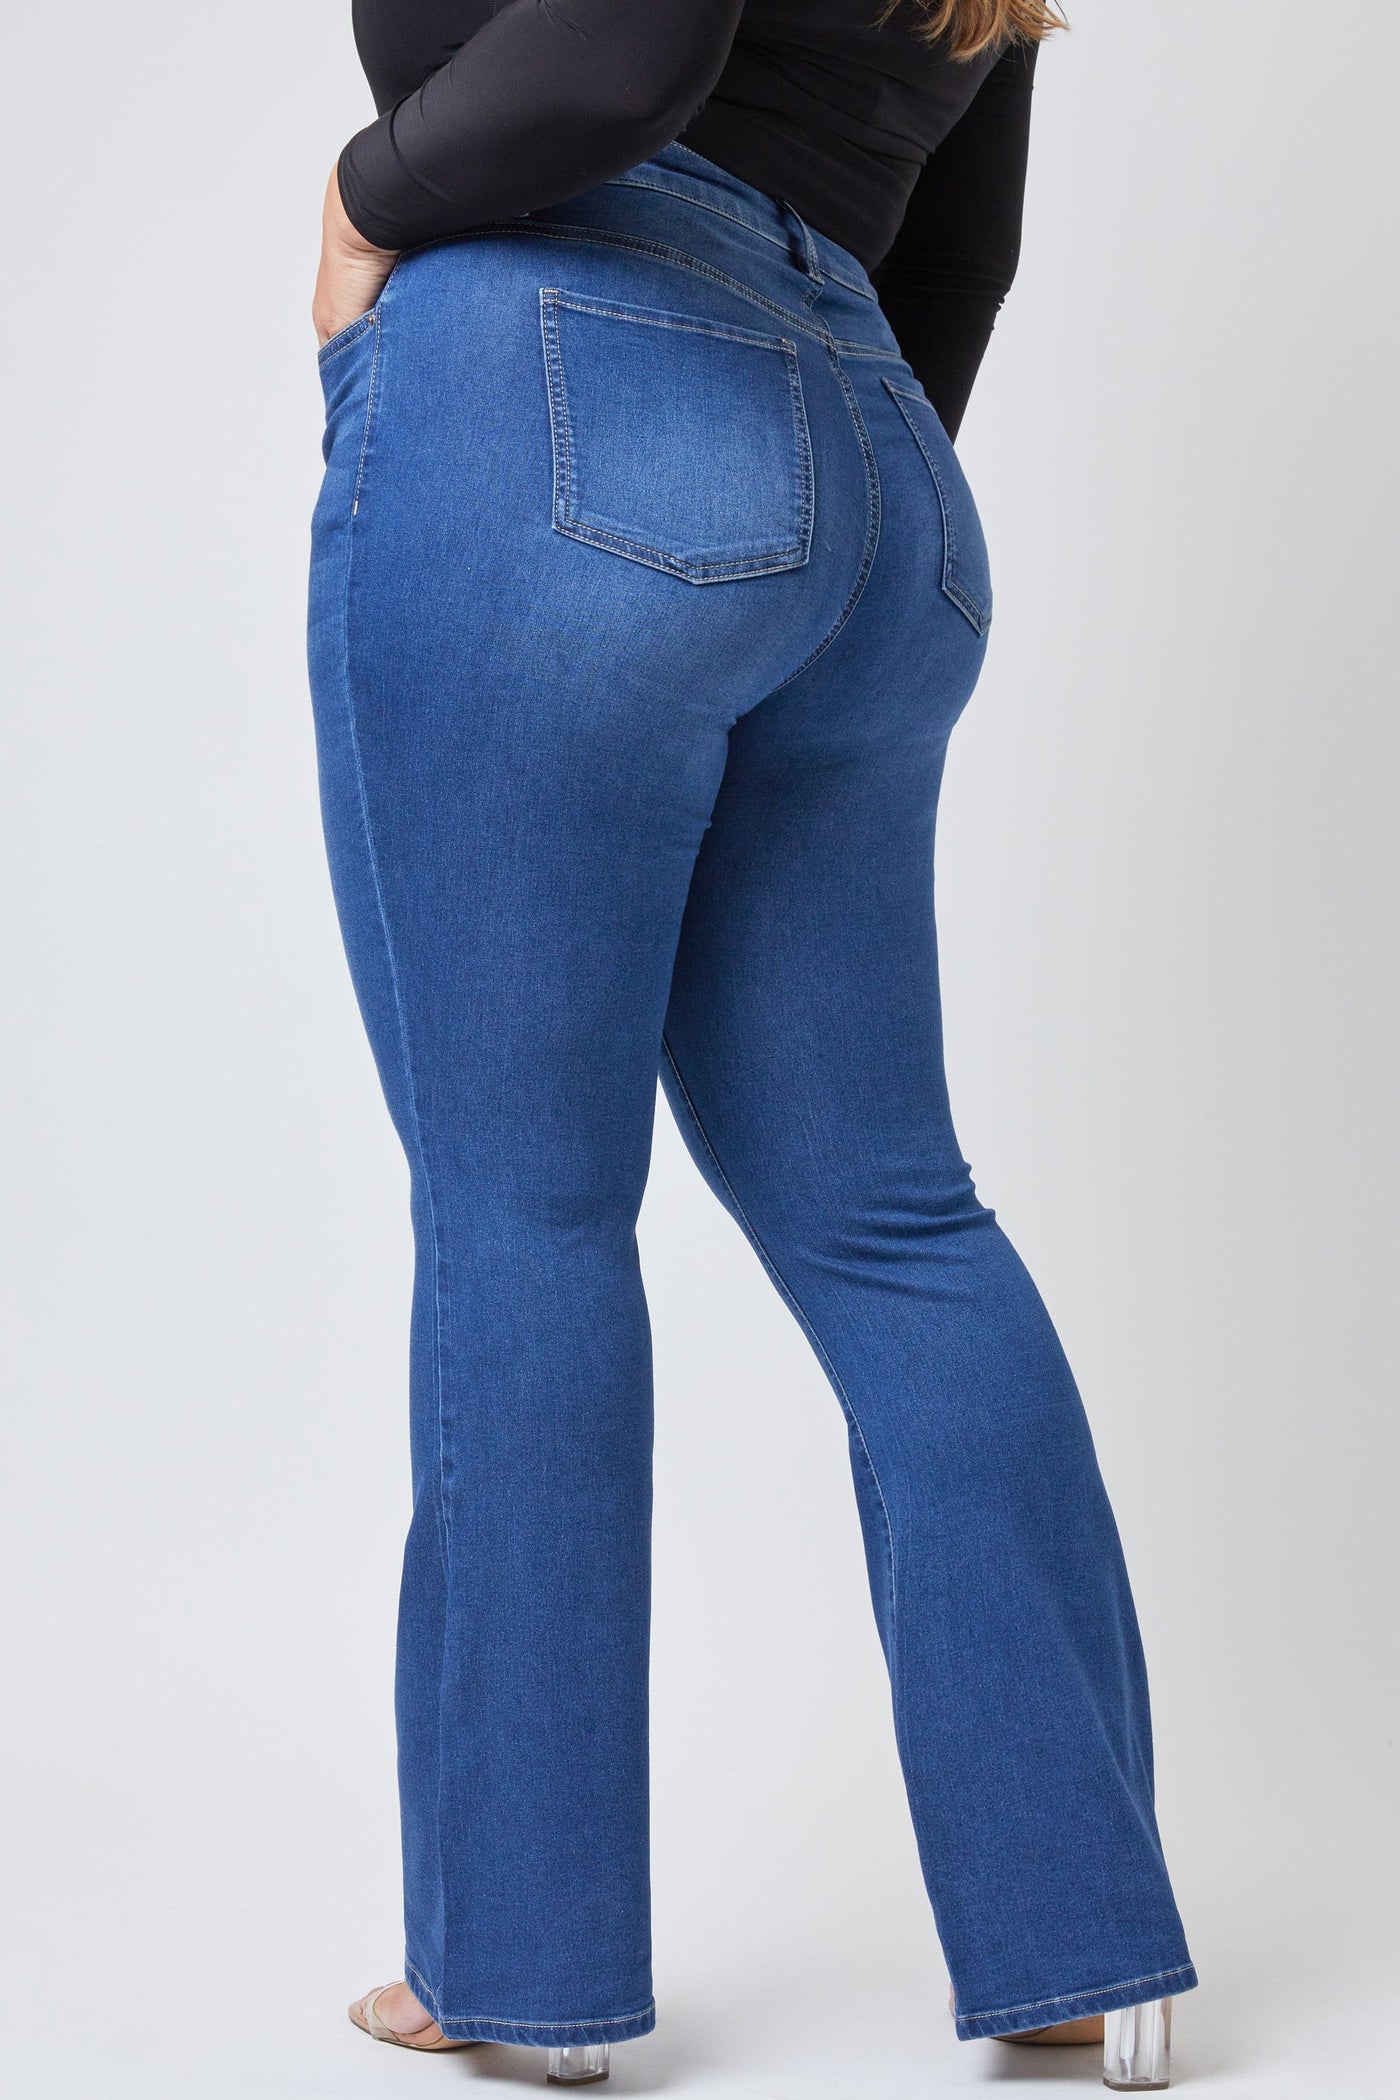 Junior Plus Size Hyper Denim Super Stretchy Flare Jean